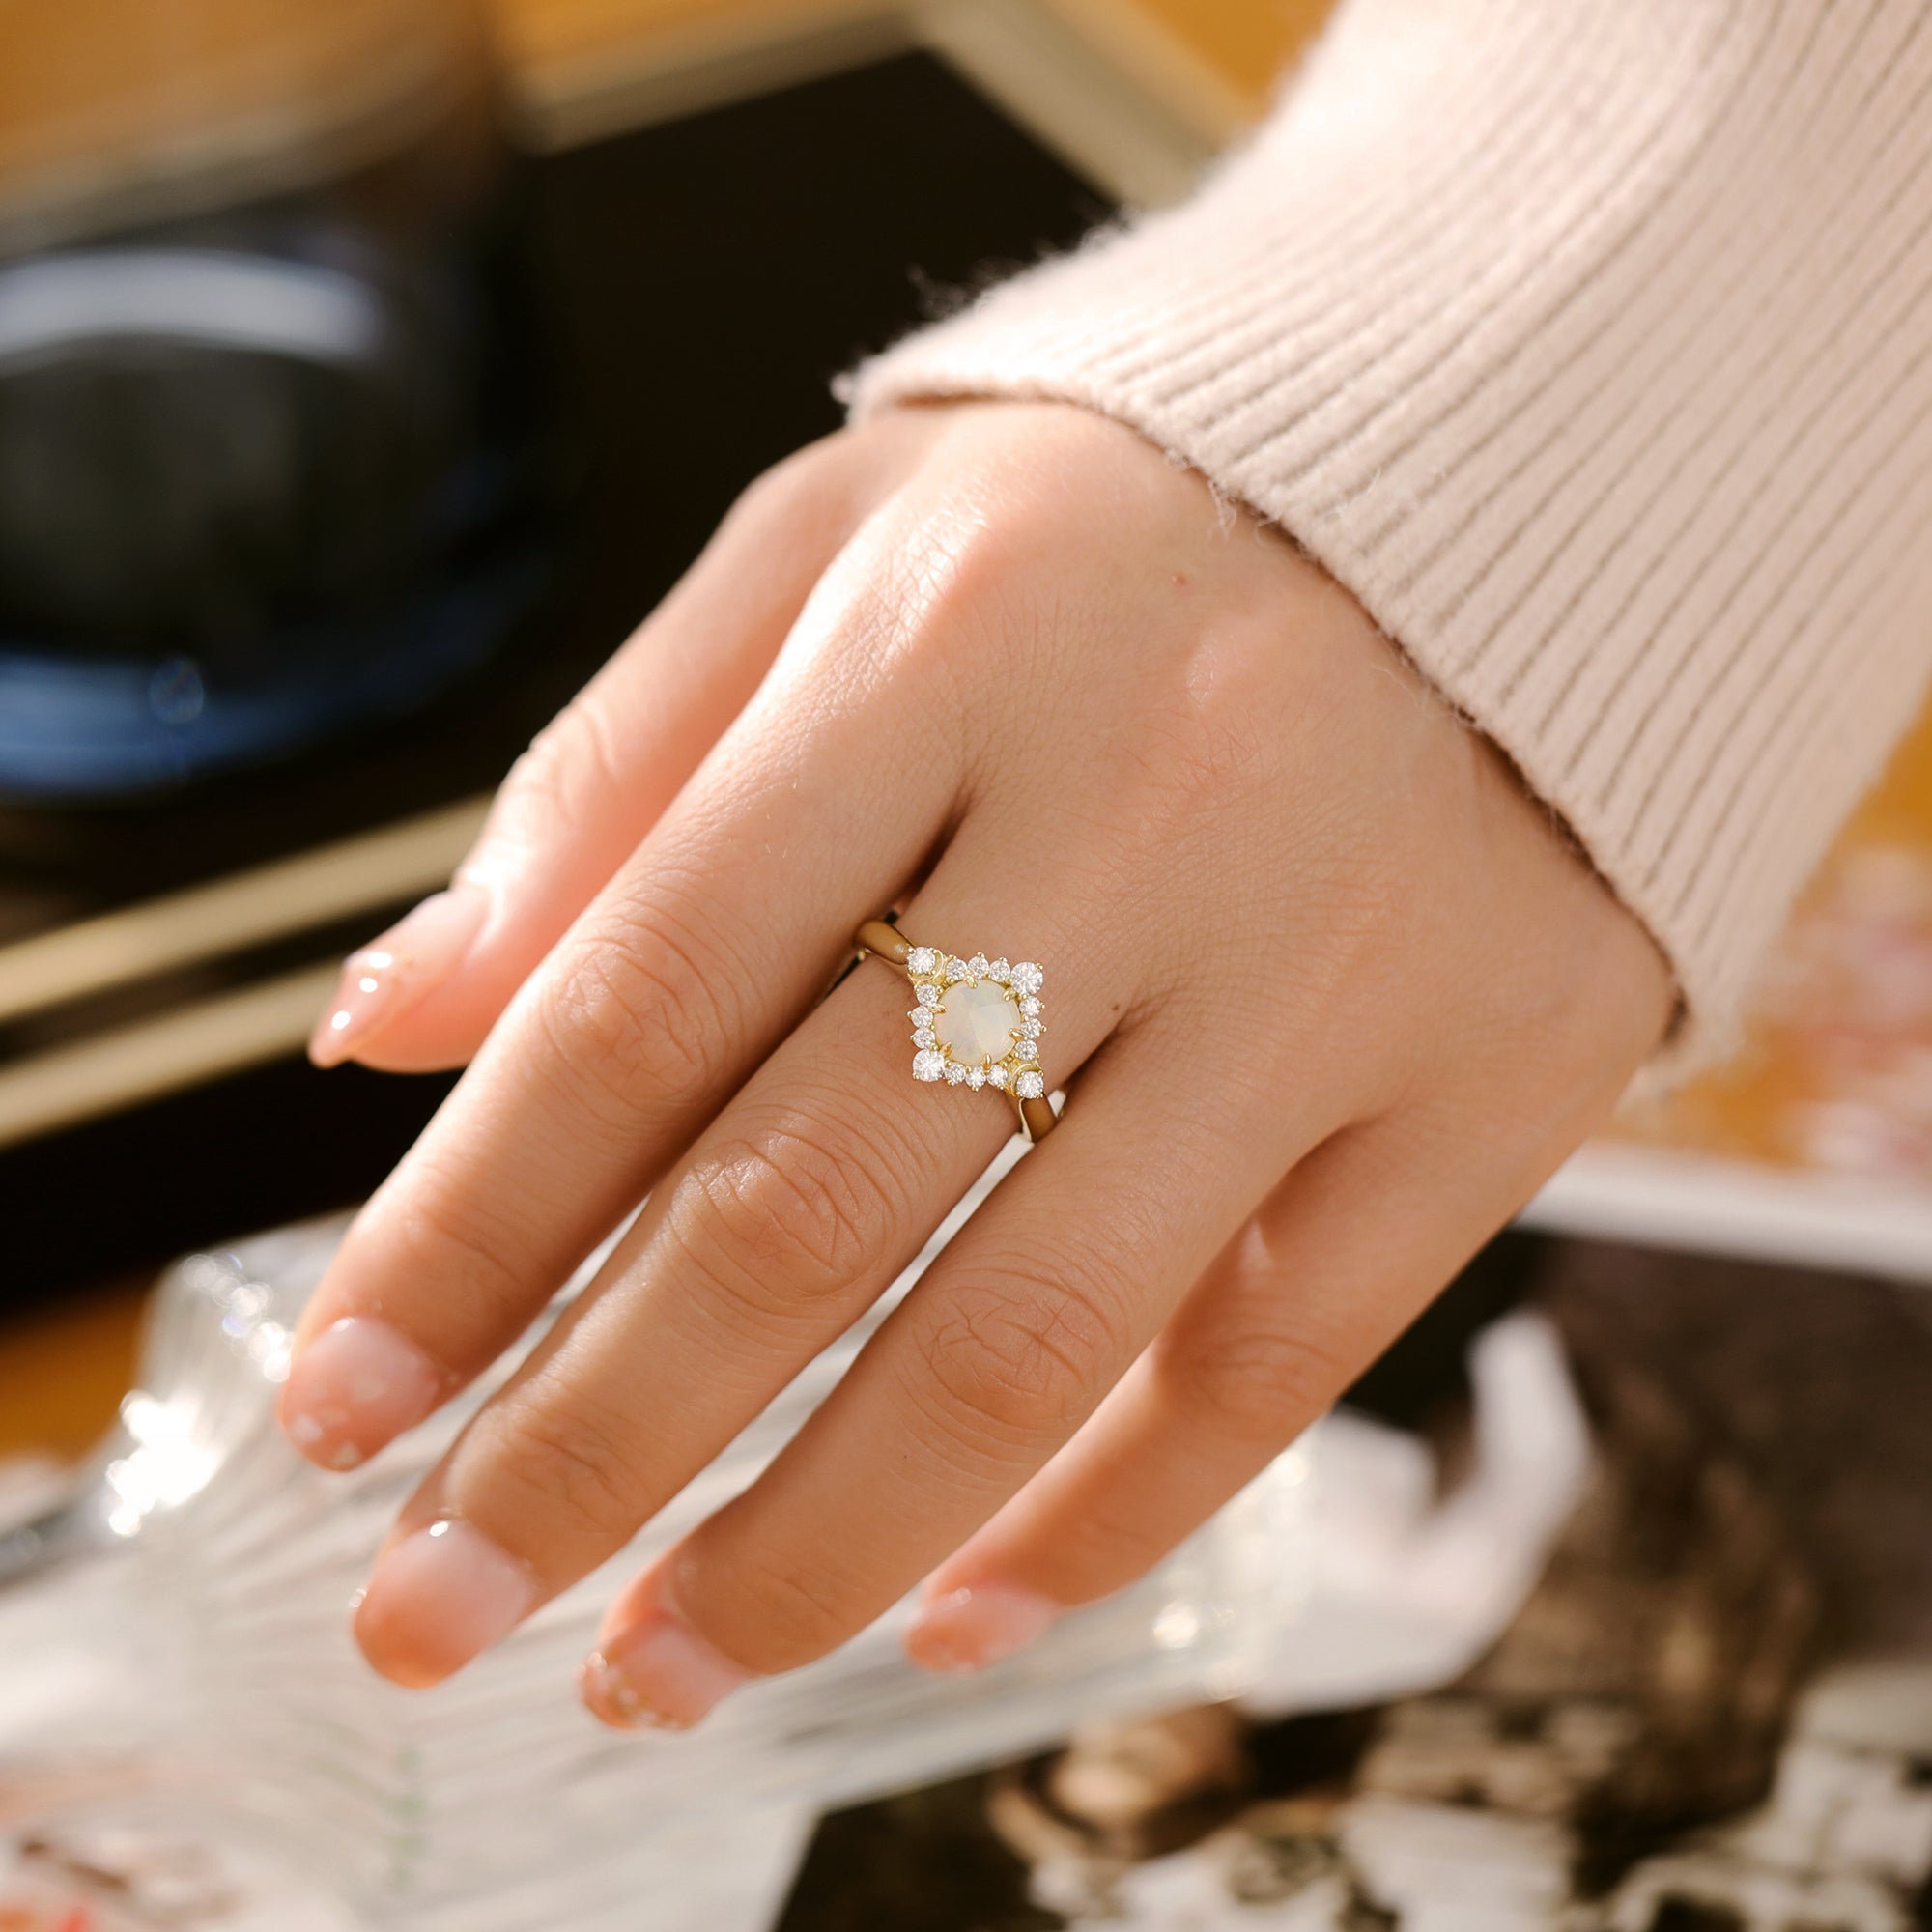 Scarlett Alexandrite Ring Round Cut 925 Sterling Silver Gold Plated Flower Gemstone Ring